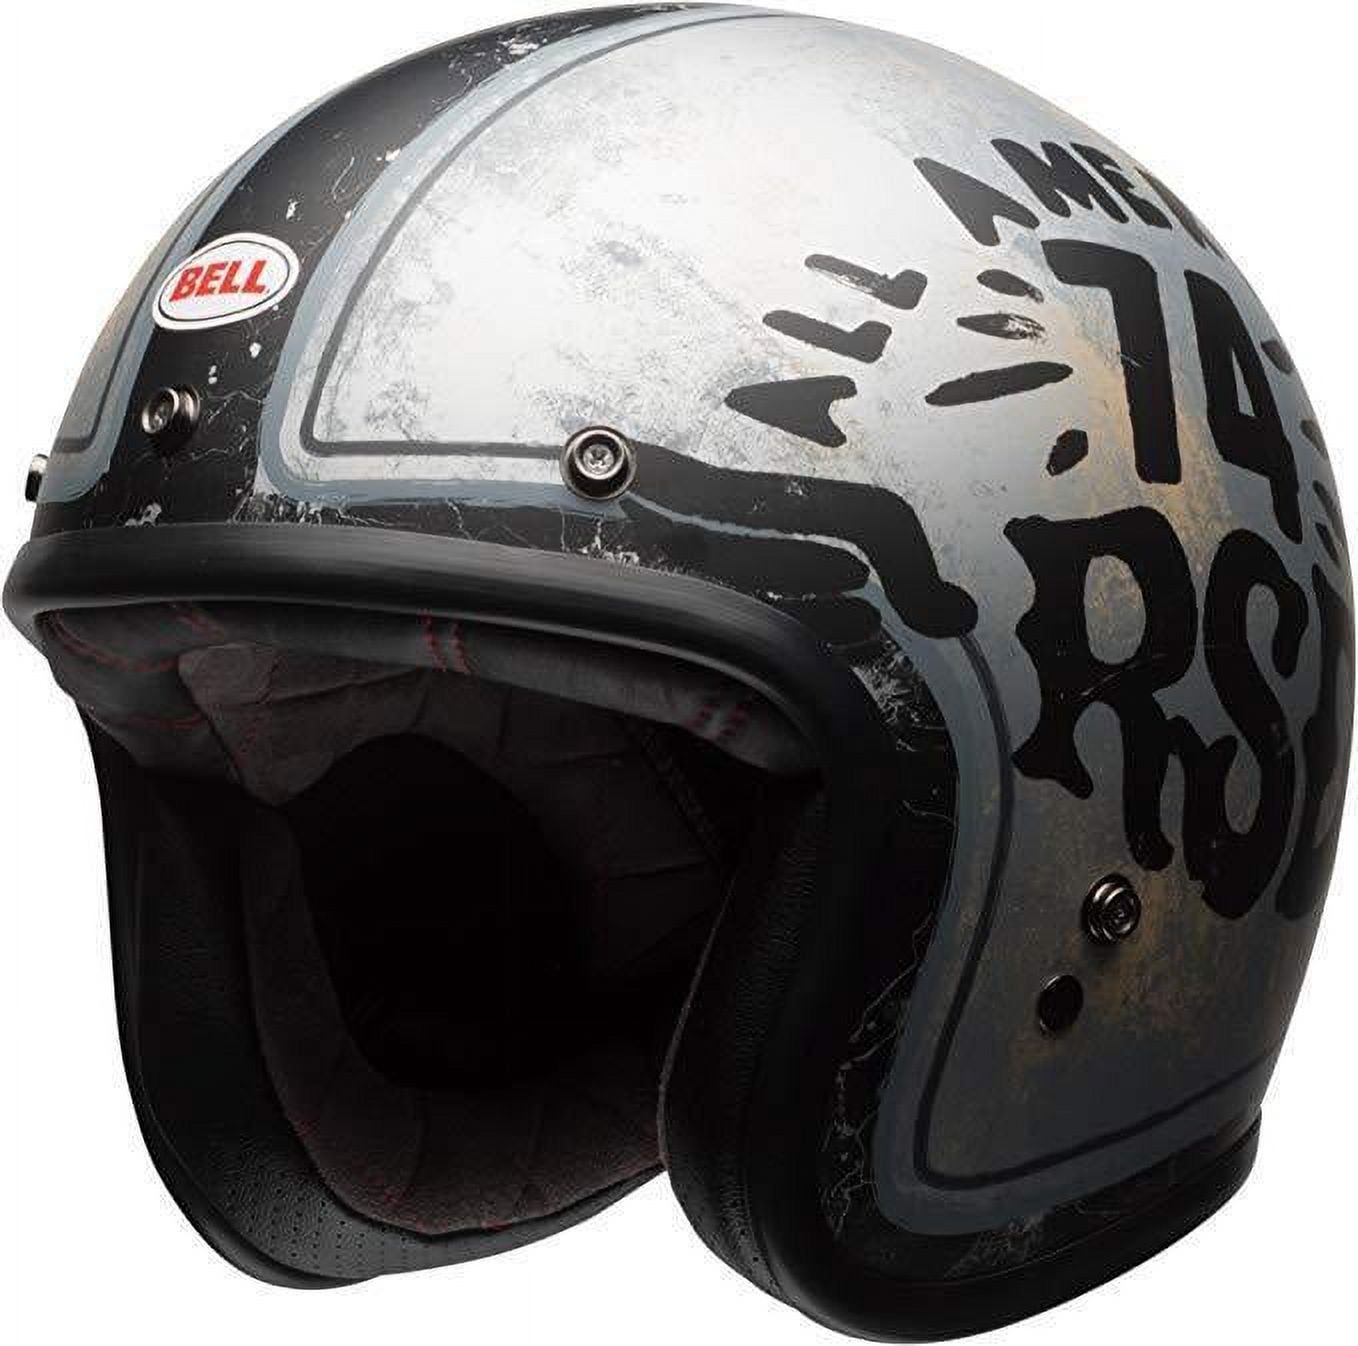 Motorcycle Helmet Baseball Cap Style fiberglass custom Helmet Bike black hd